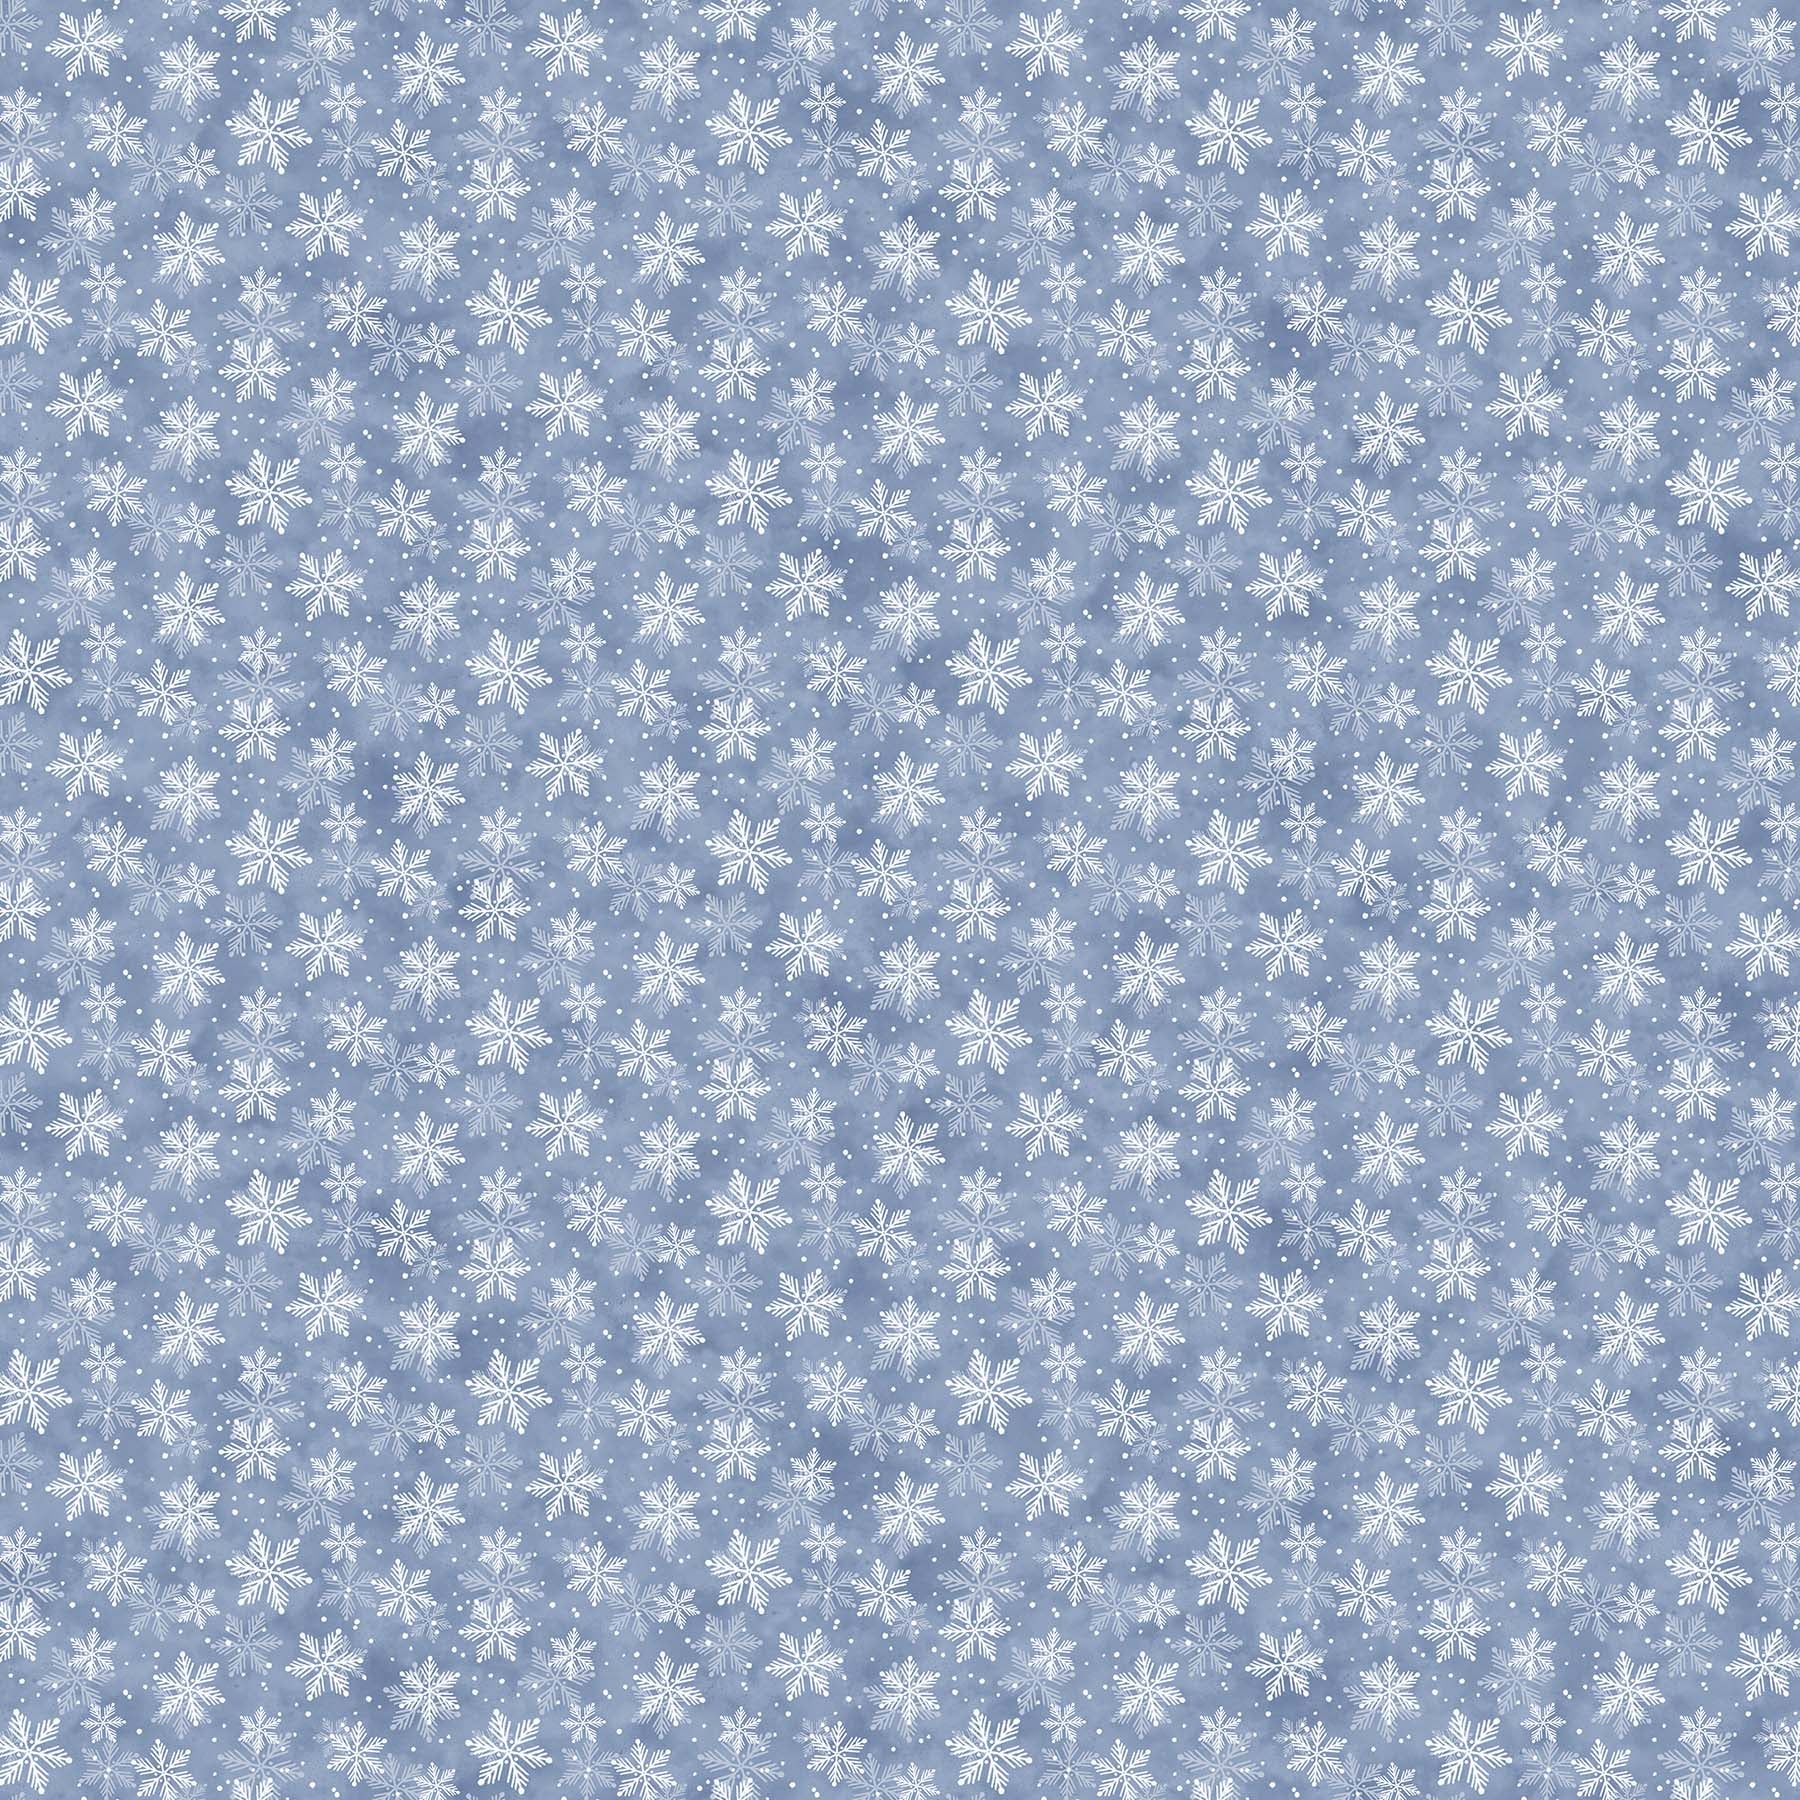 Snow Much Fun Flannel Dark Blue Snowflake Fabric